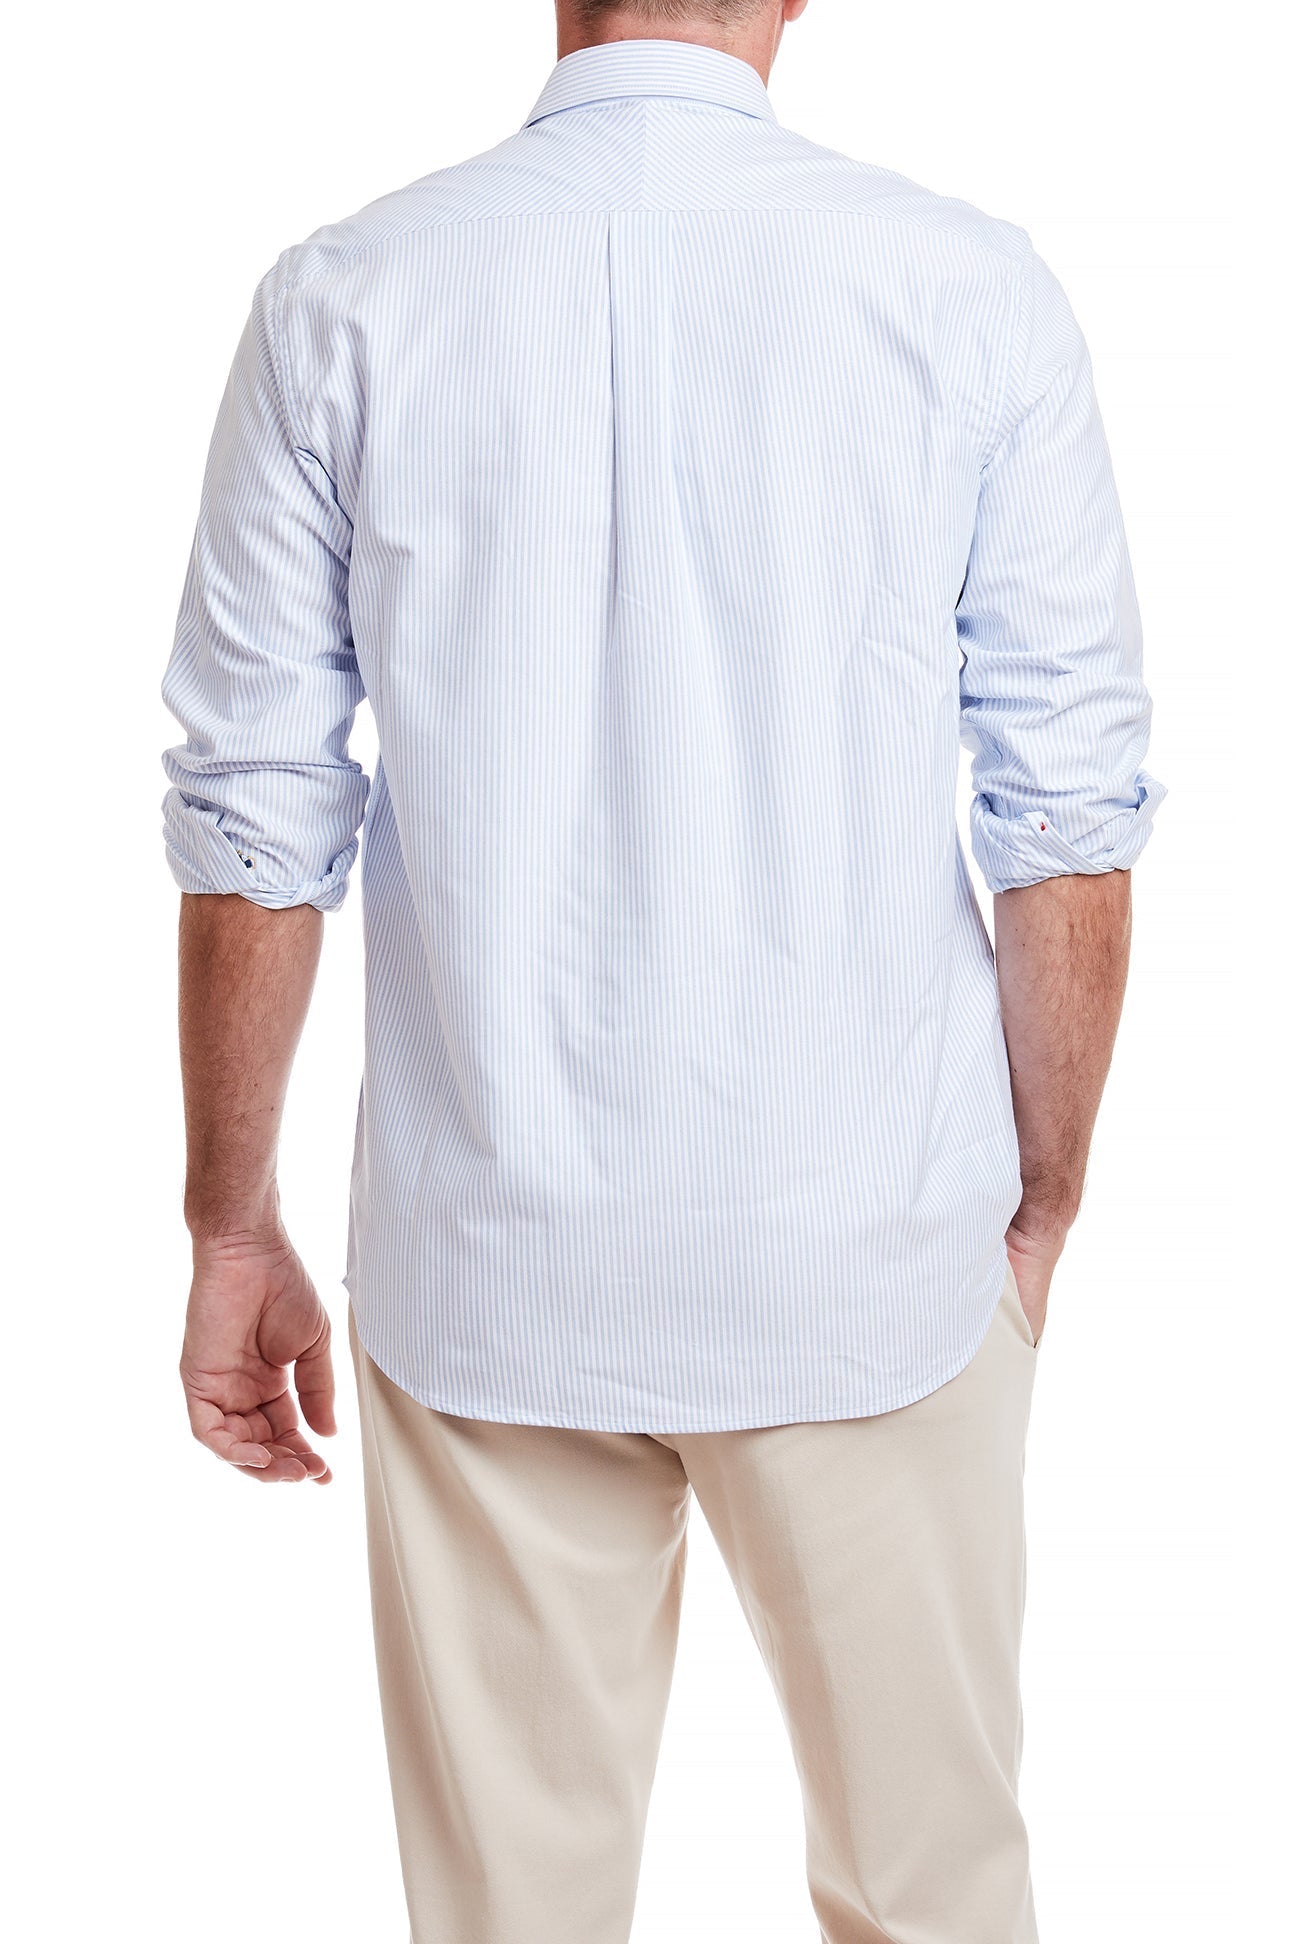 Chase Shirt Oxford Blue Stripe with Single Turkey MENS SPORT SHIRTS Castaway Nantucket Island